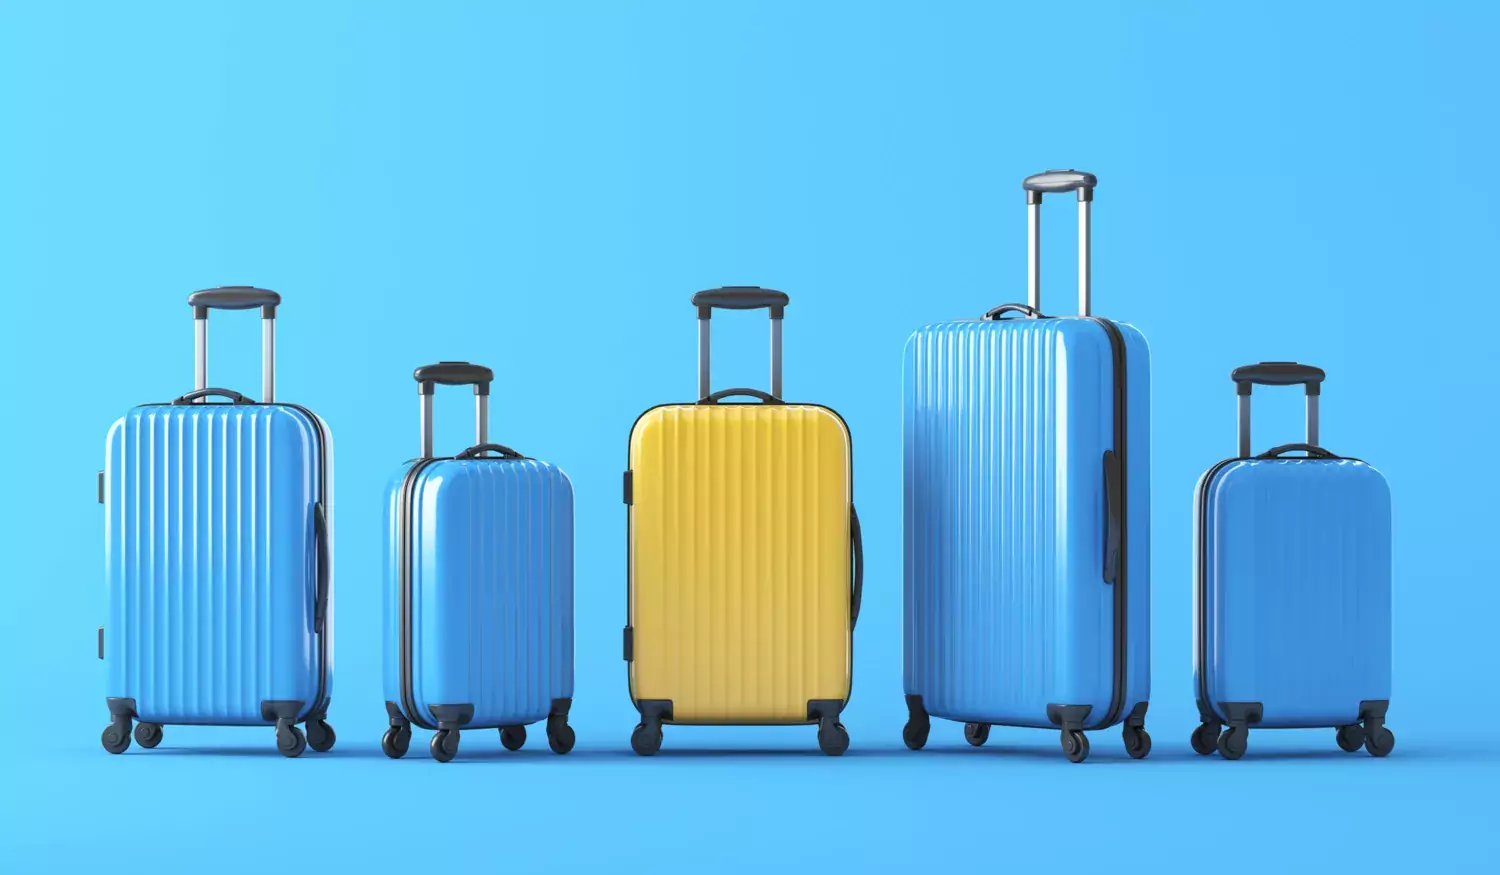 Four suitcases.